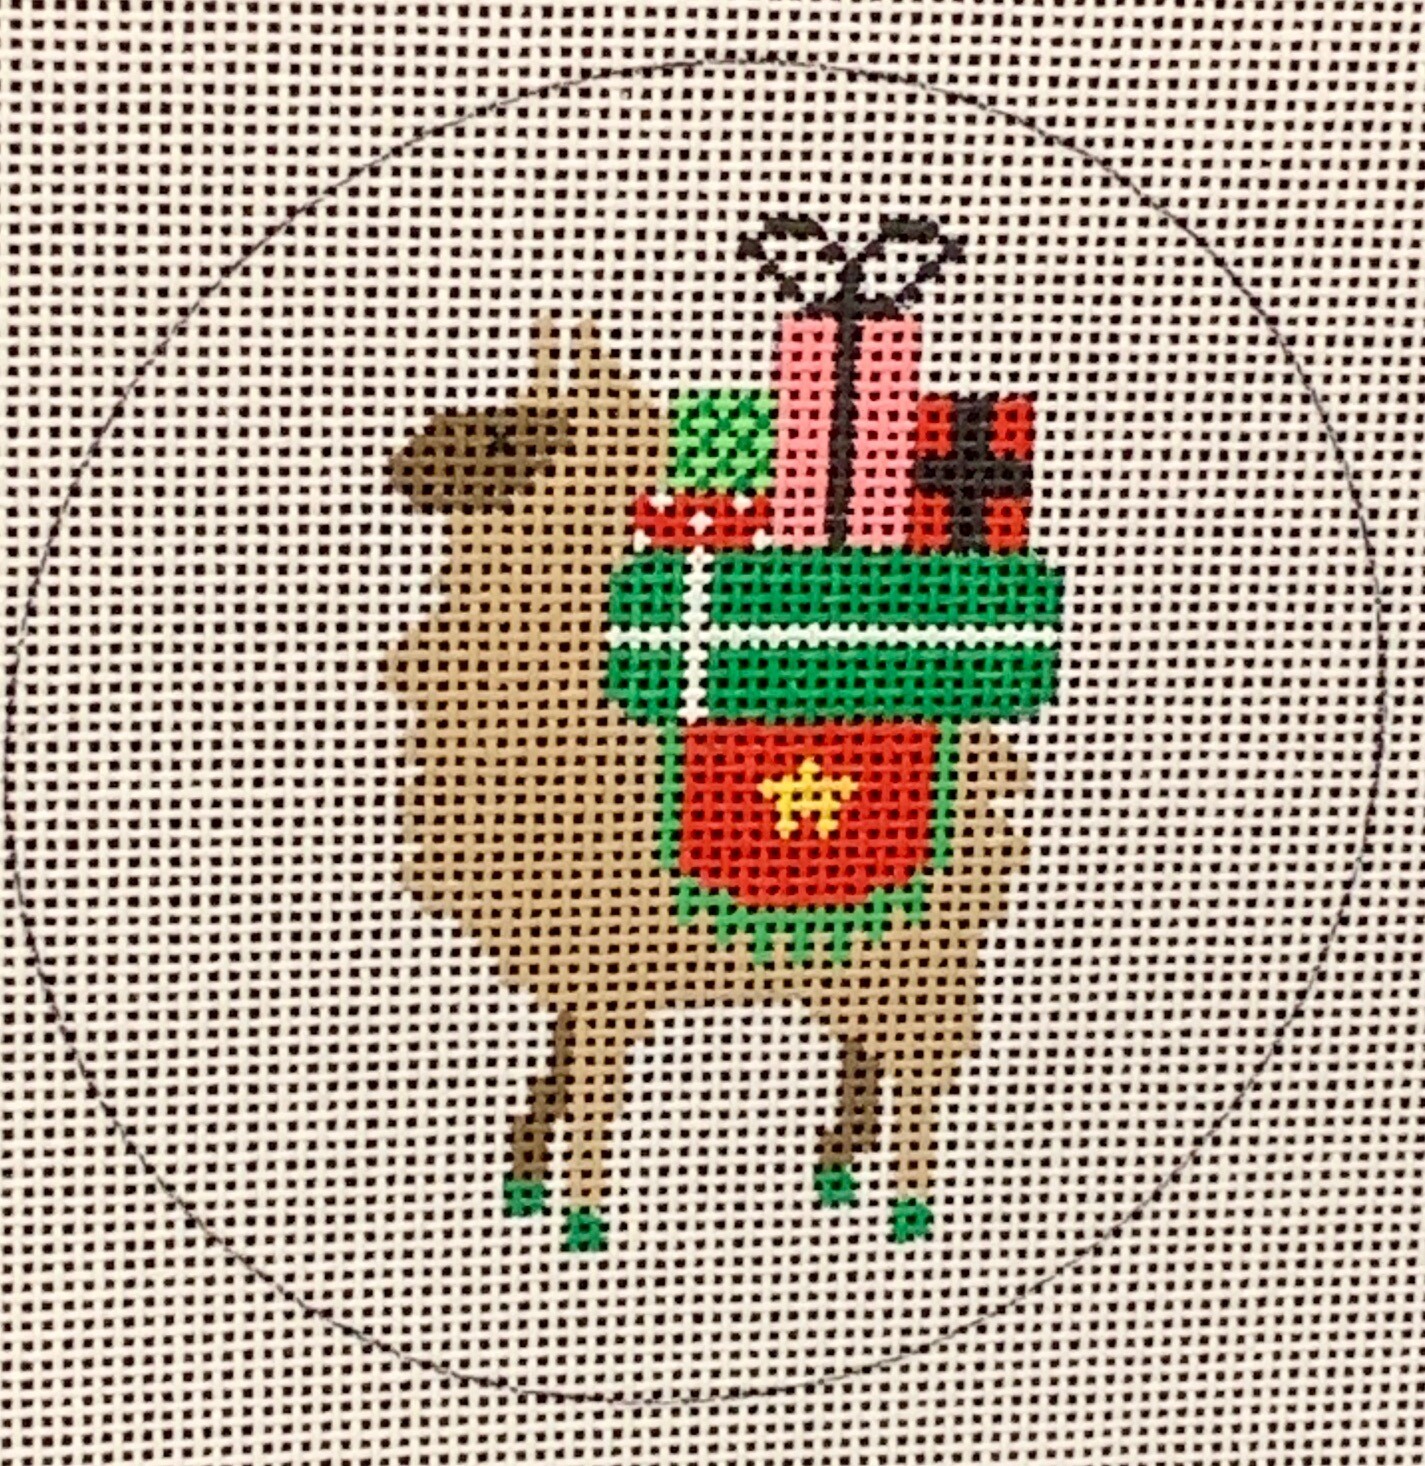 Llama with Christmas Presents